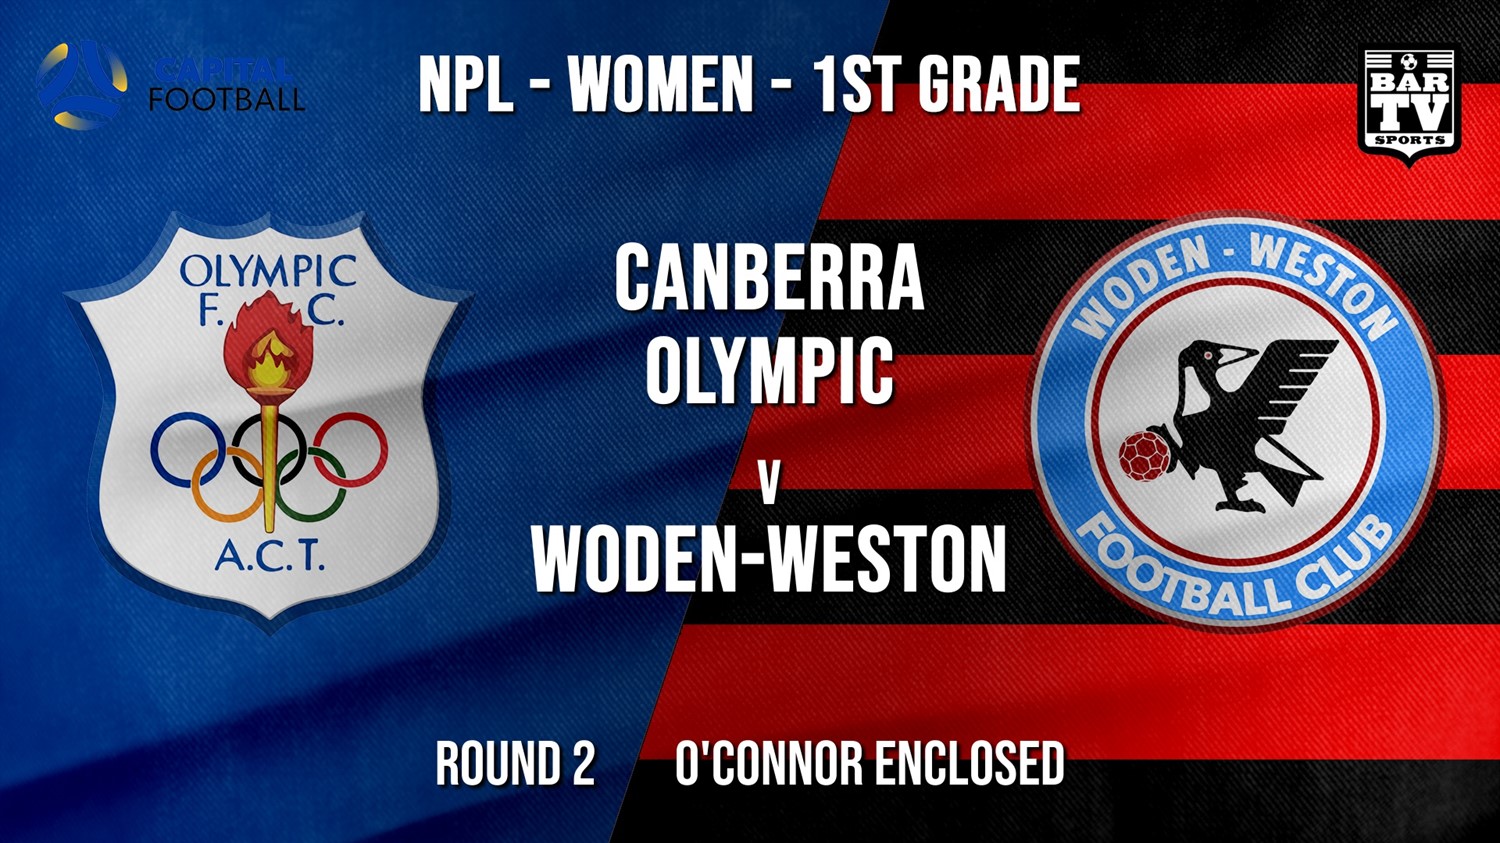 NPL Women - Capital Round 2 - Canberra Olympic FC (women) v Woden-Weston FC (women) (1) Minigame Slate Image